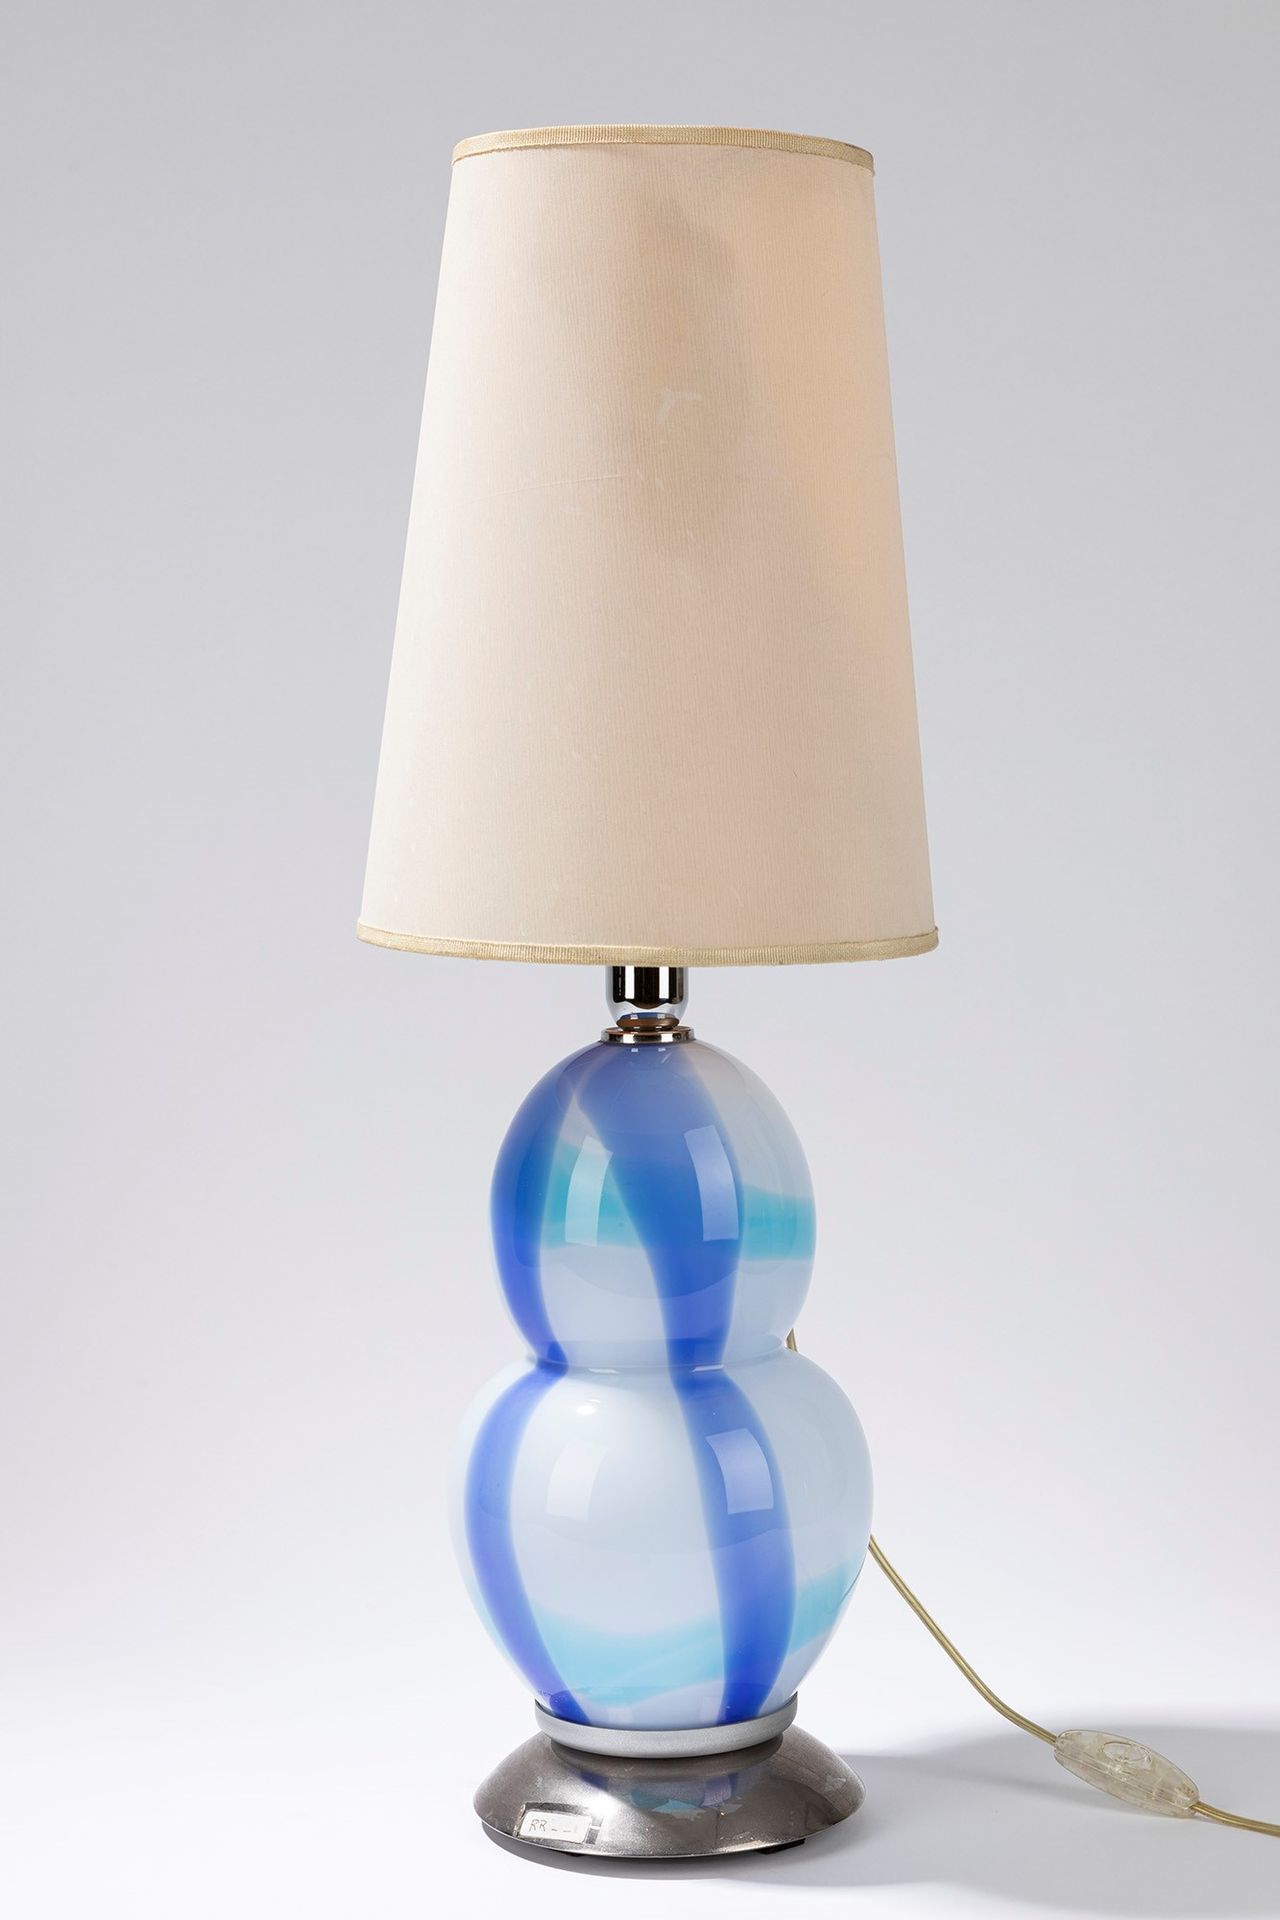 Ettore Sottsass 台灯，70年代

cm h 64,5 x 20
polychrome glass。